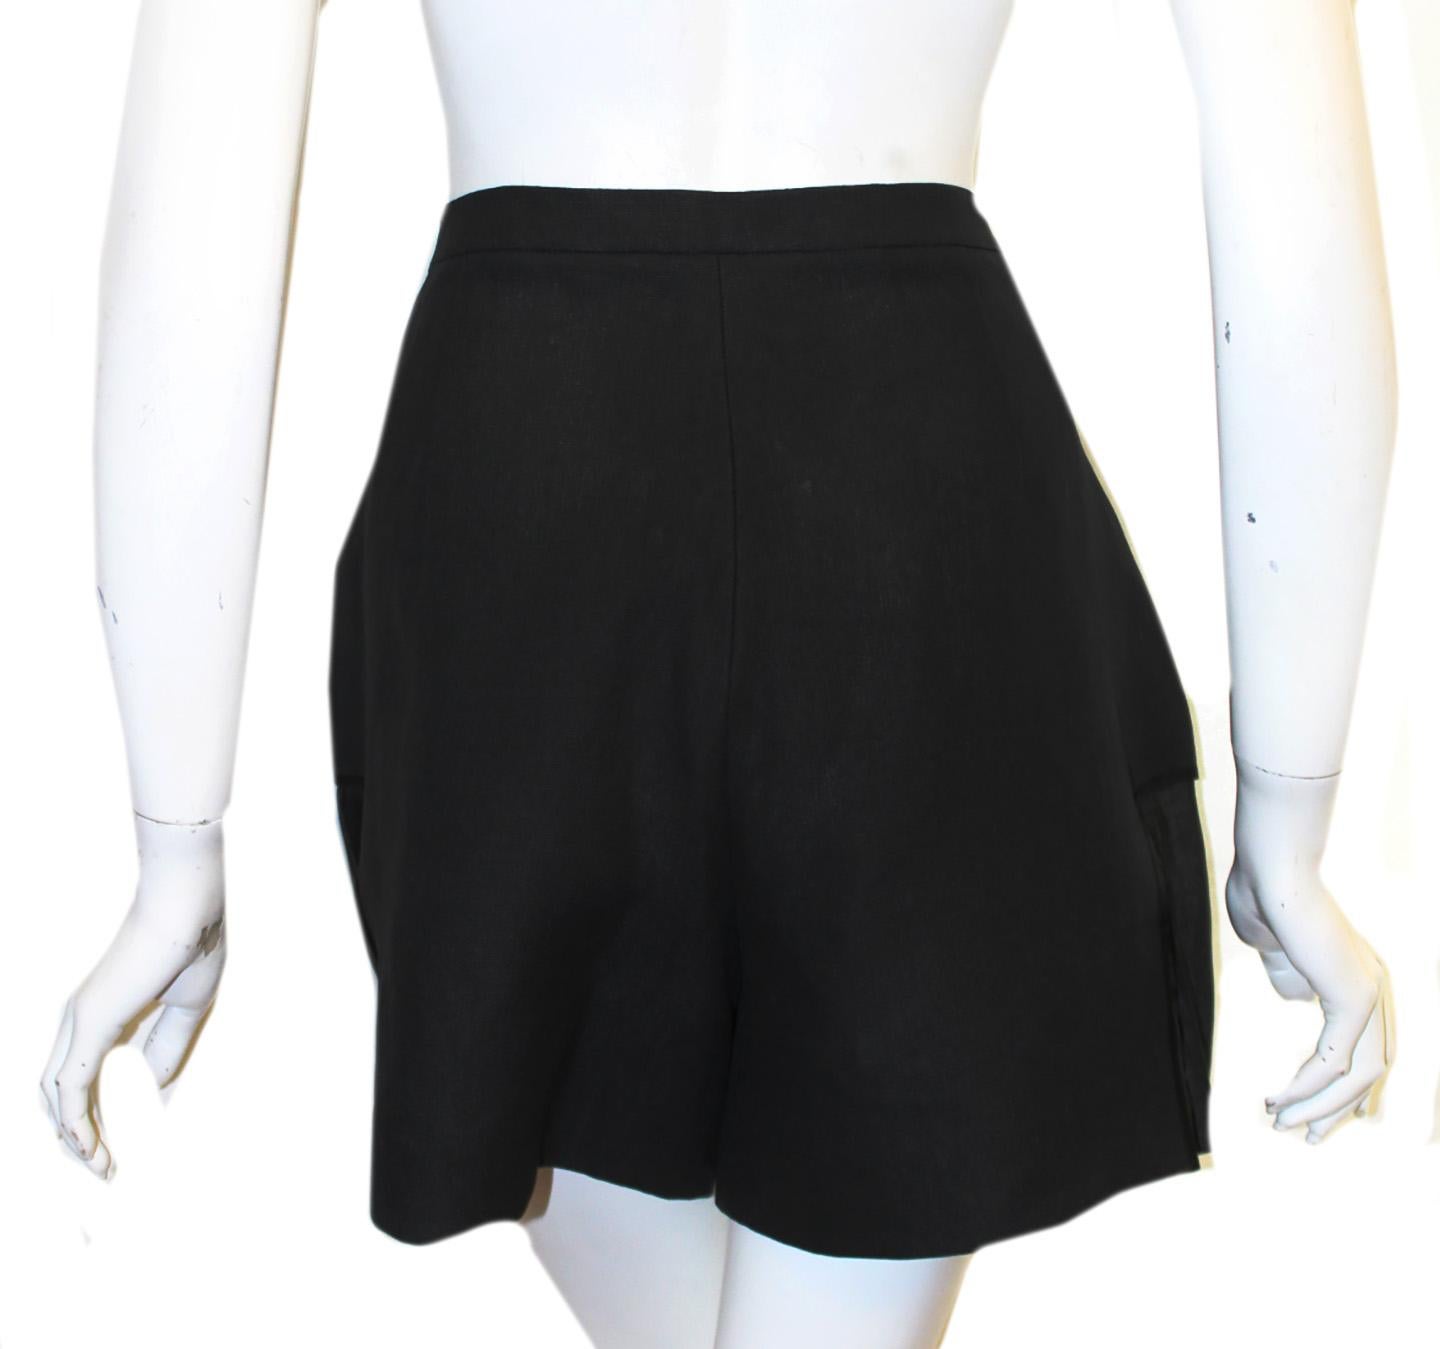 Del Pozo Black Short Paper & Cotton Culottes W/ Sheer Inserts 44 EU In Excellent Condition For Sale In Palm Beach, FL